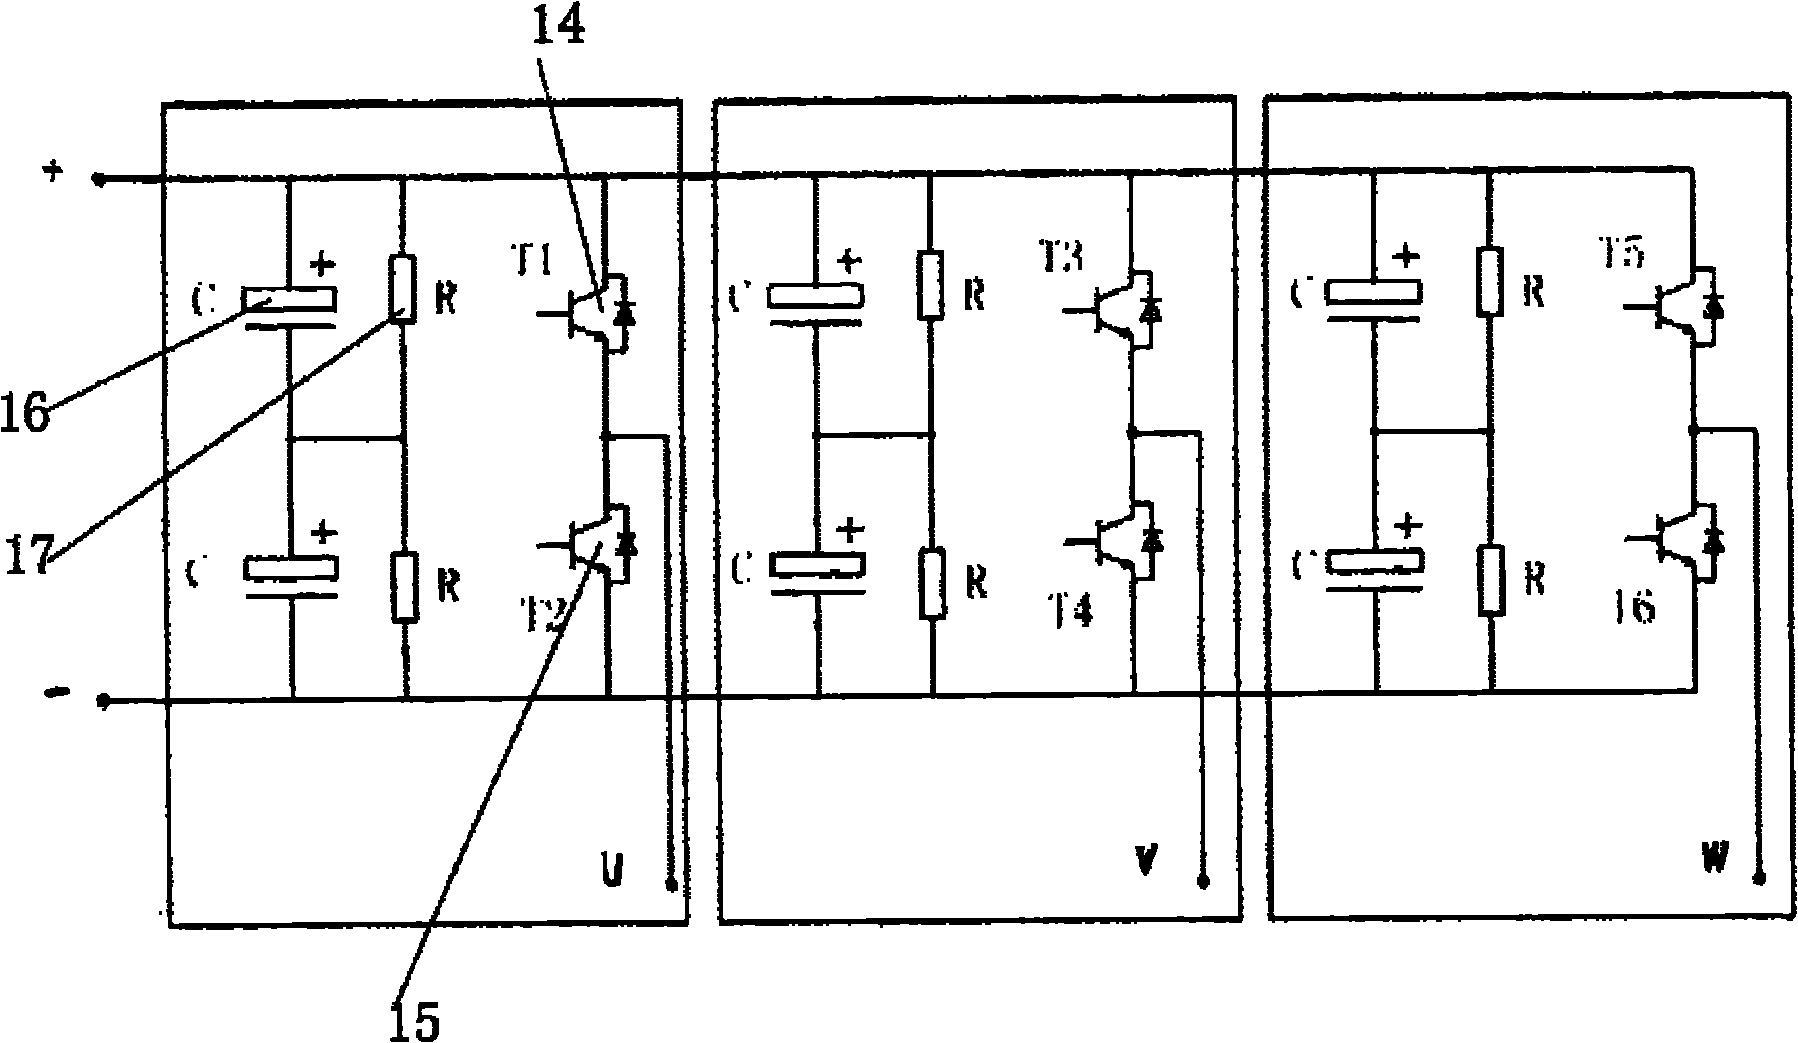 Inversion unit modularization structure device of photovoltaic inverter